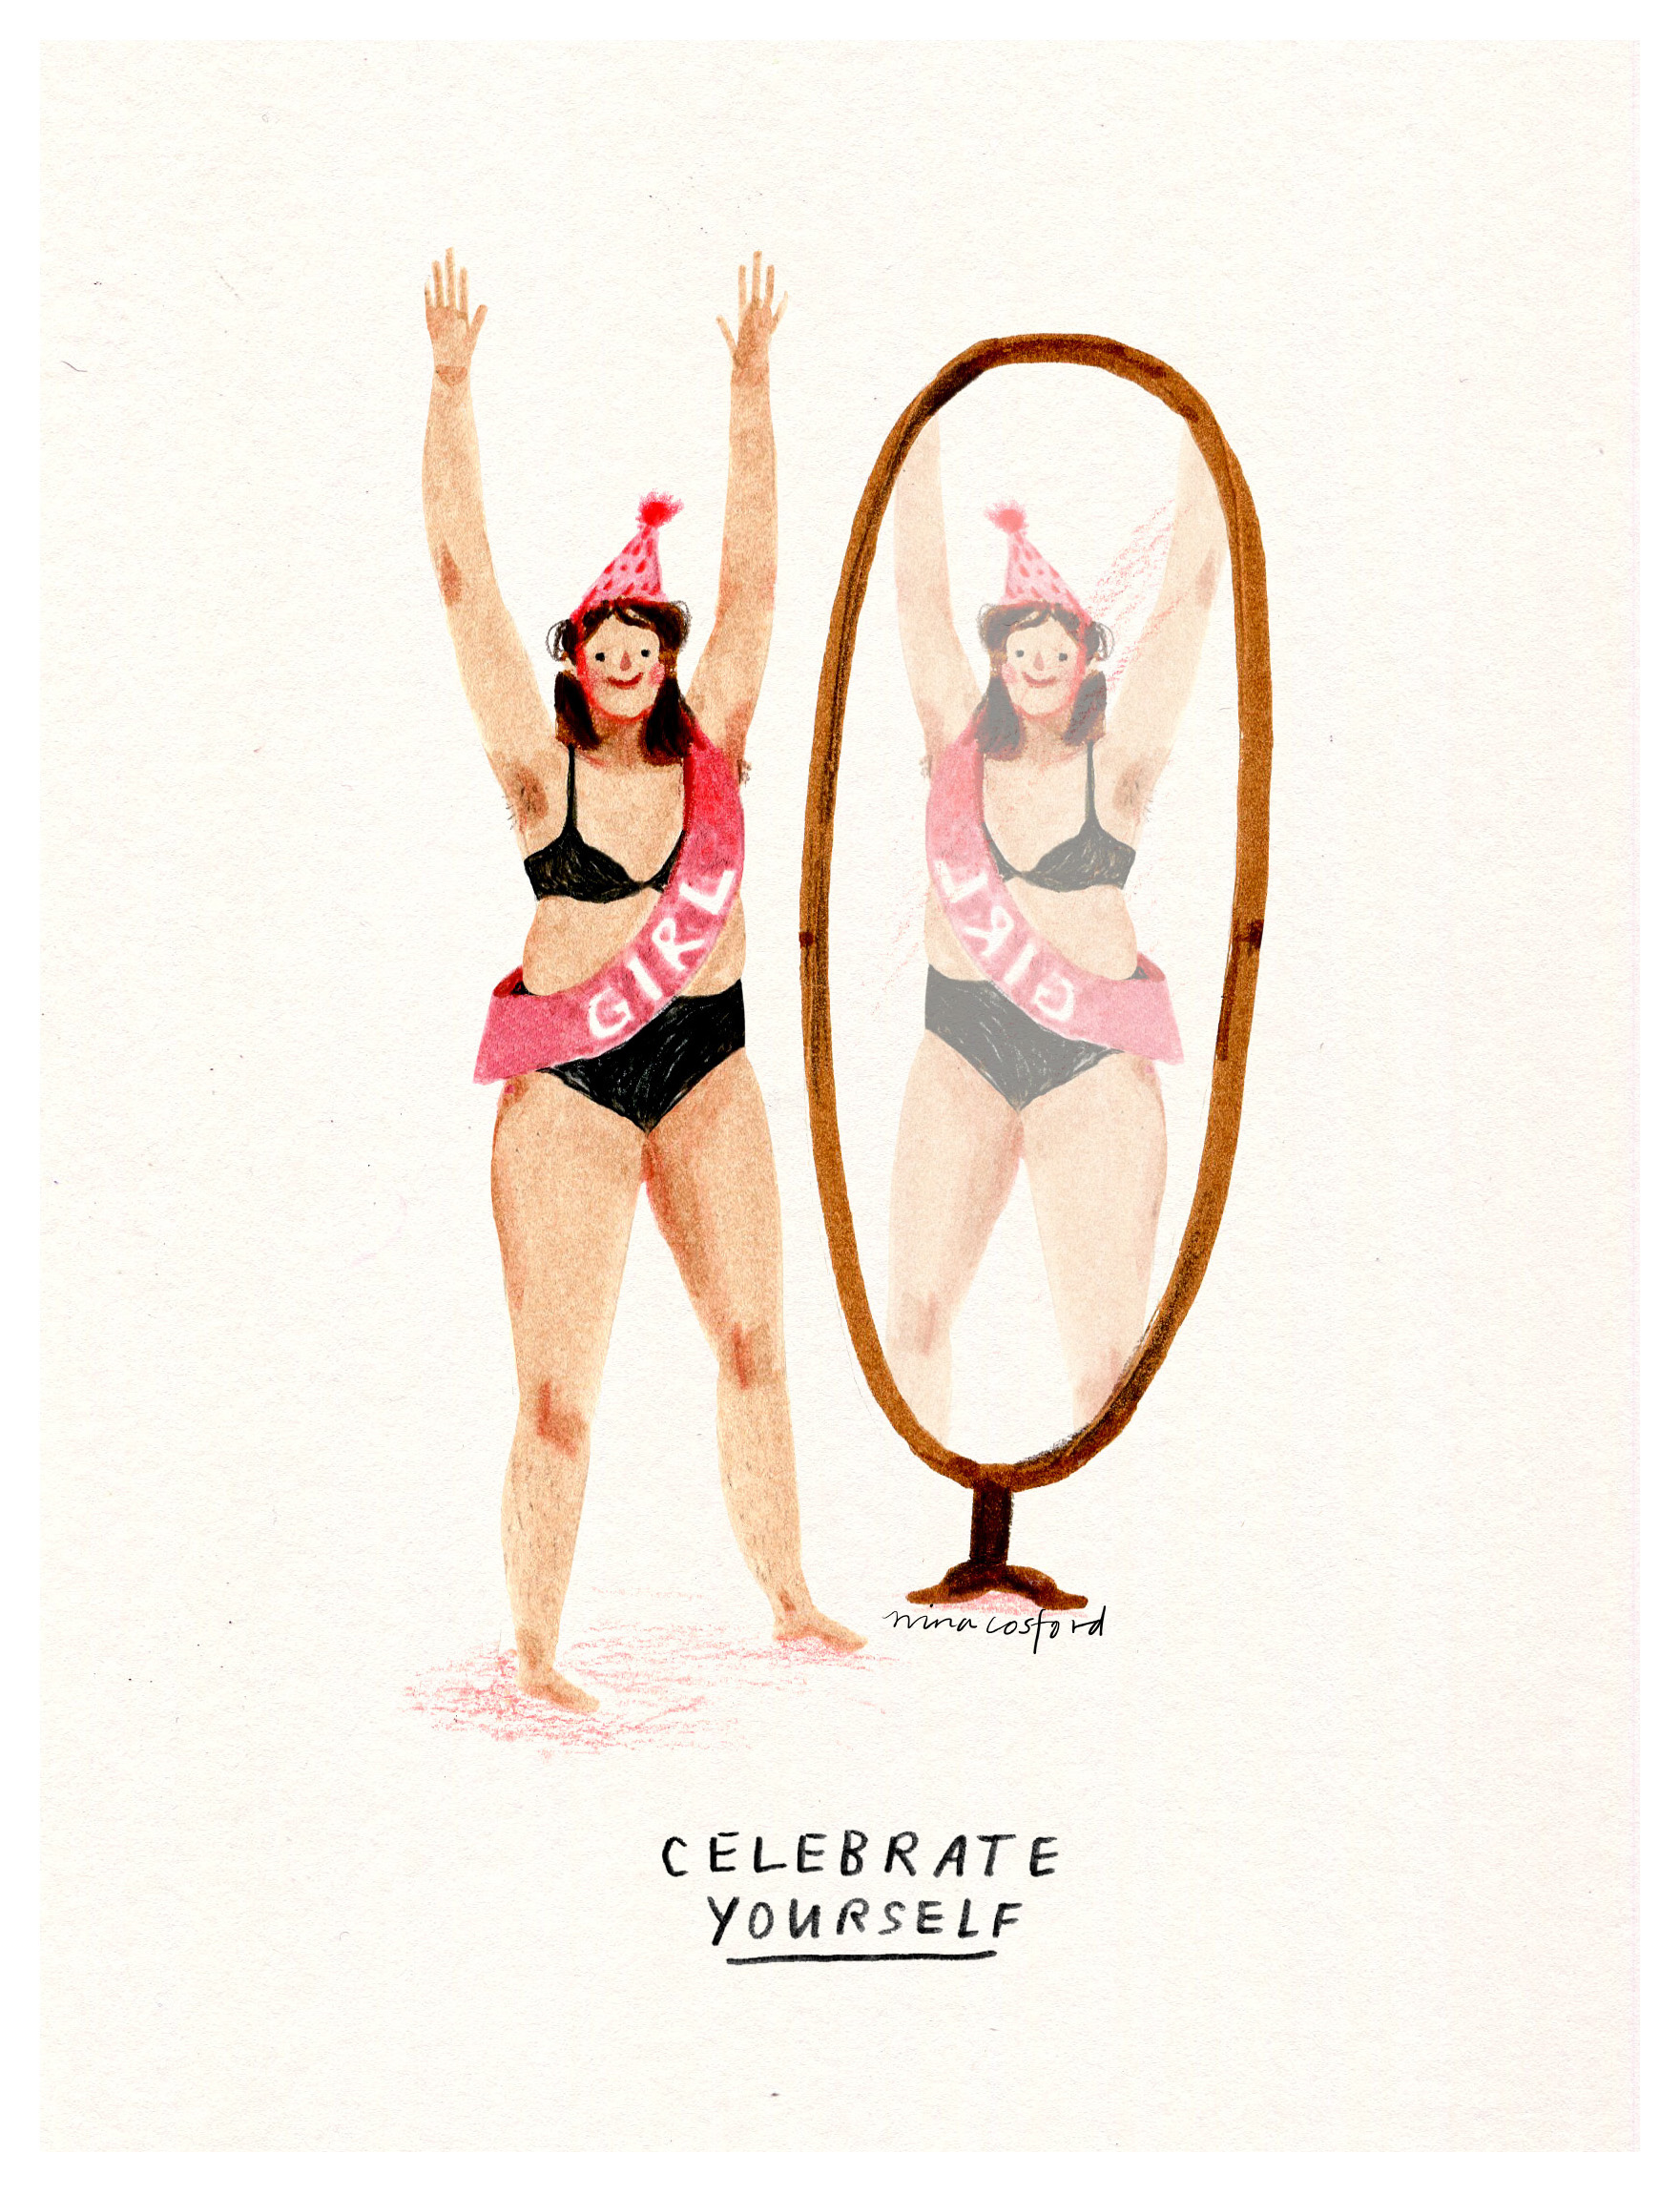 Nina Cosford Illustration - celebrate yourself